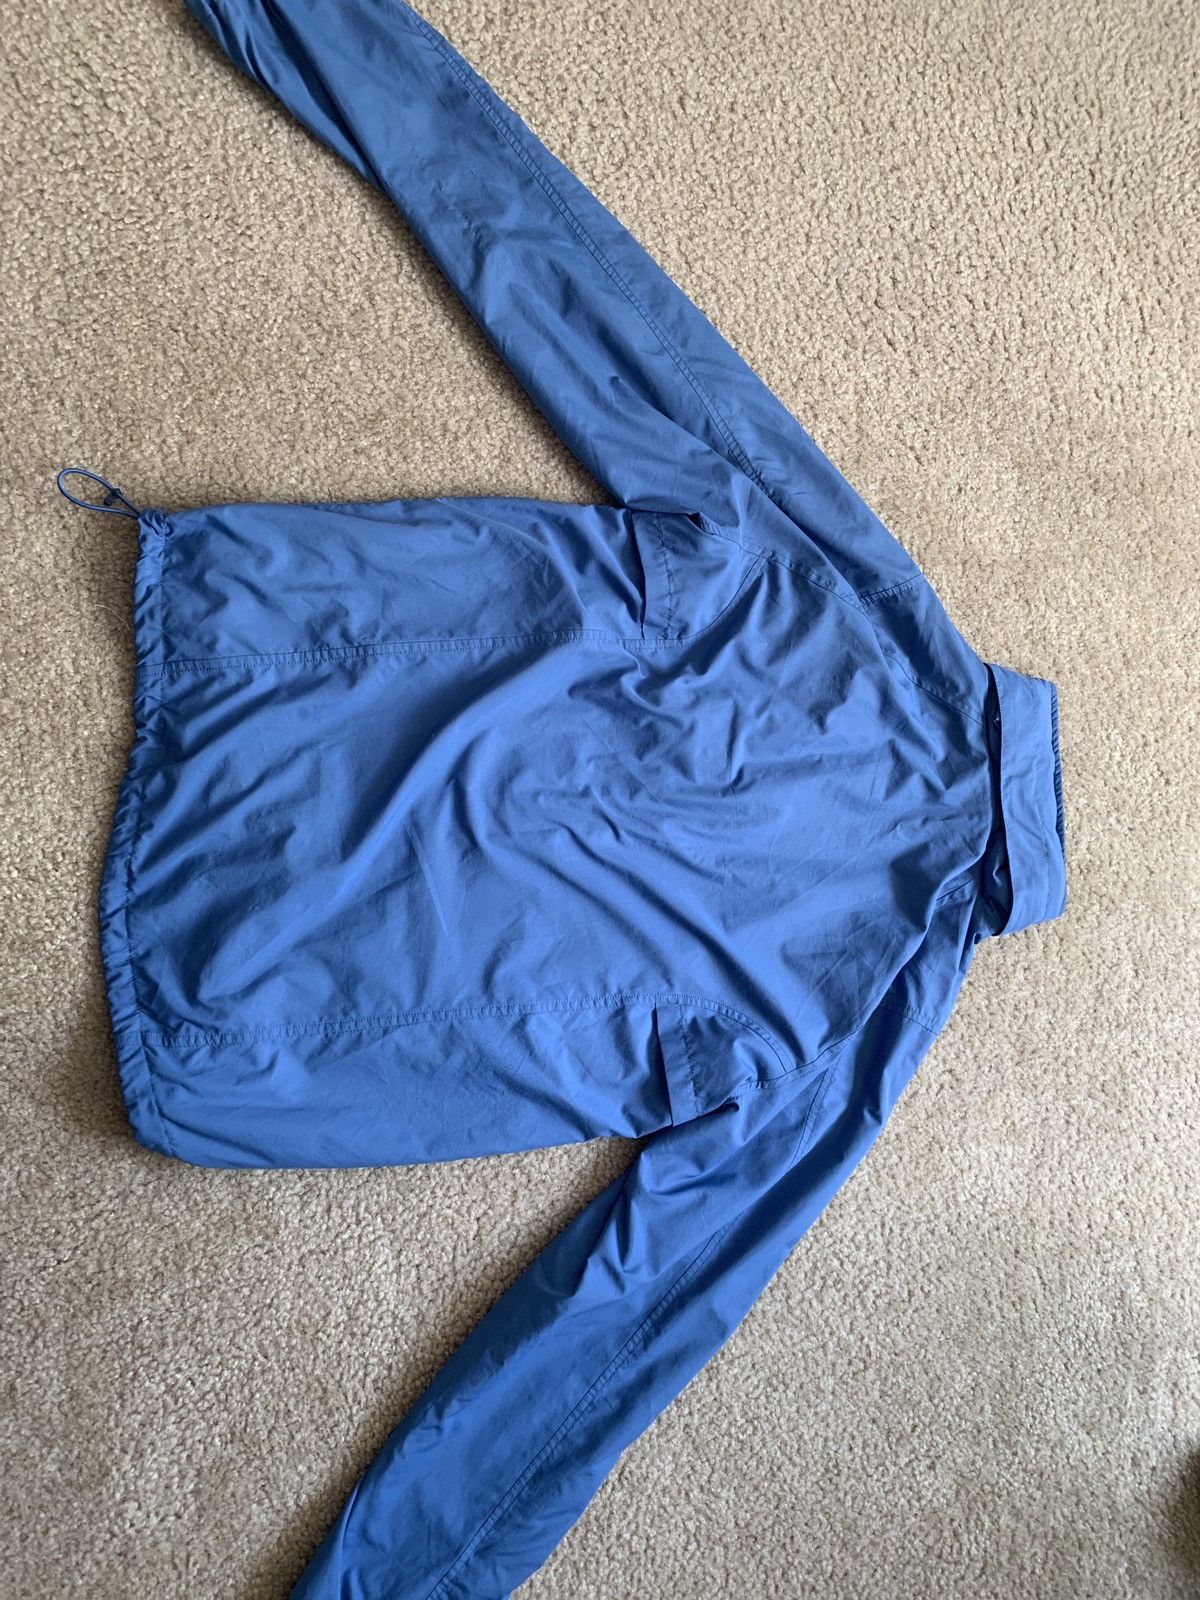 Rei Rei Raincoat Jacket (Blue) Size US S / EU 44-46 / 1 - 11 Thumbnail